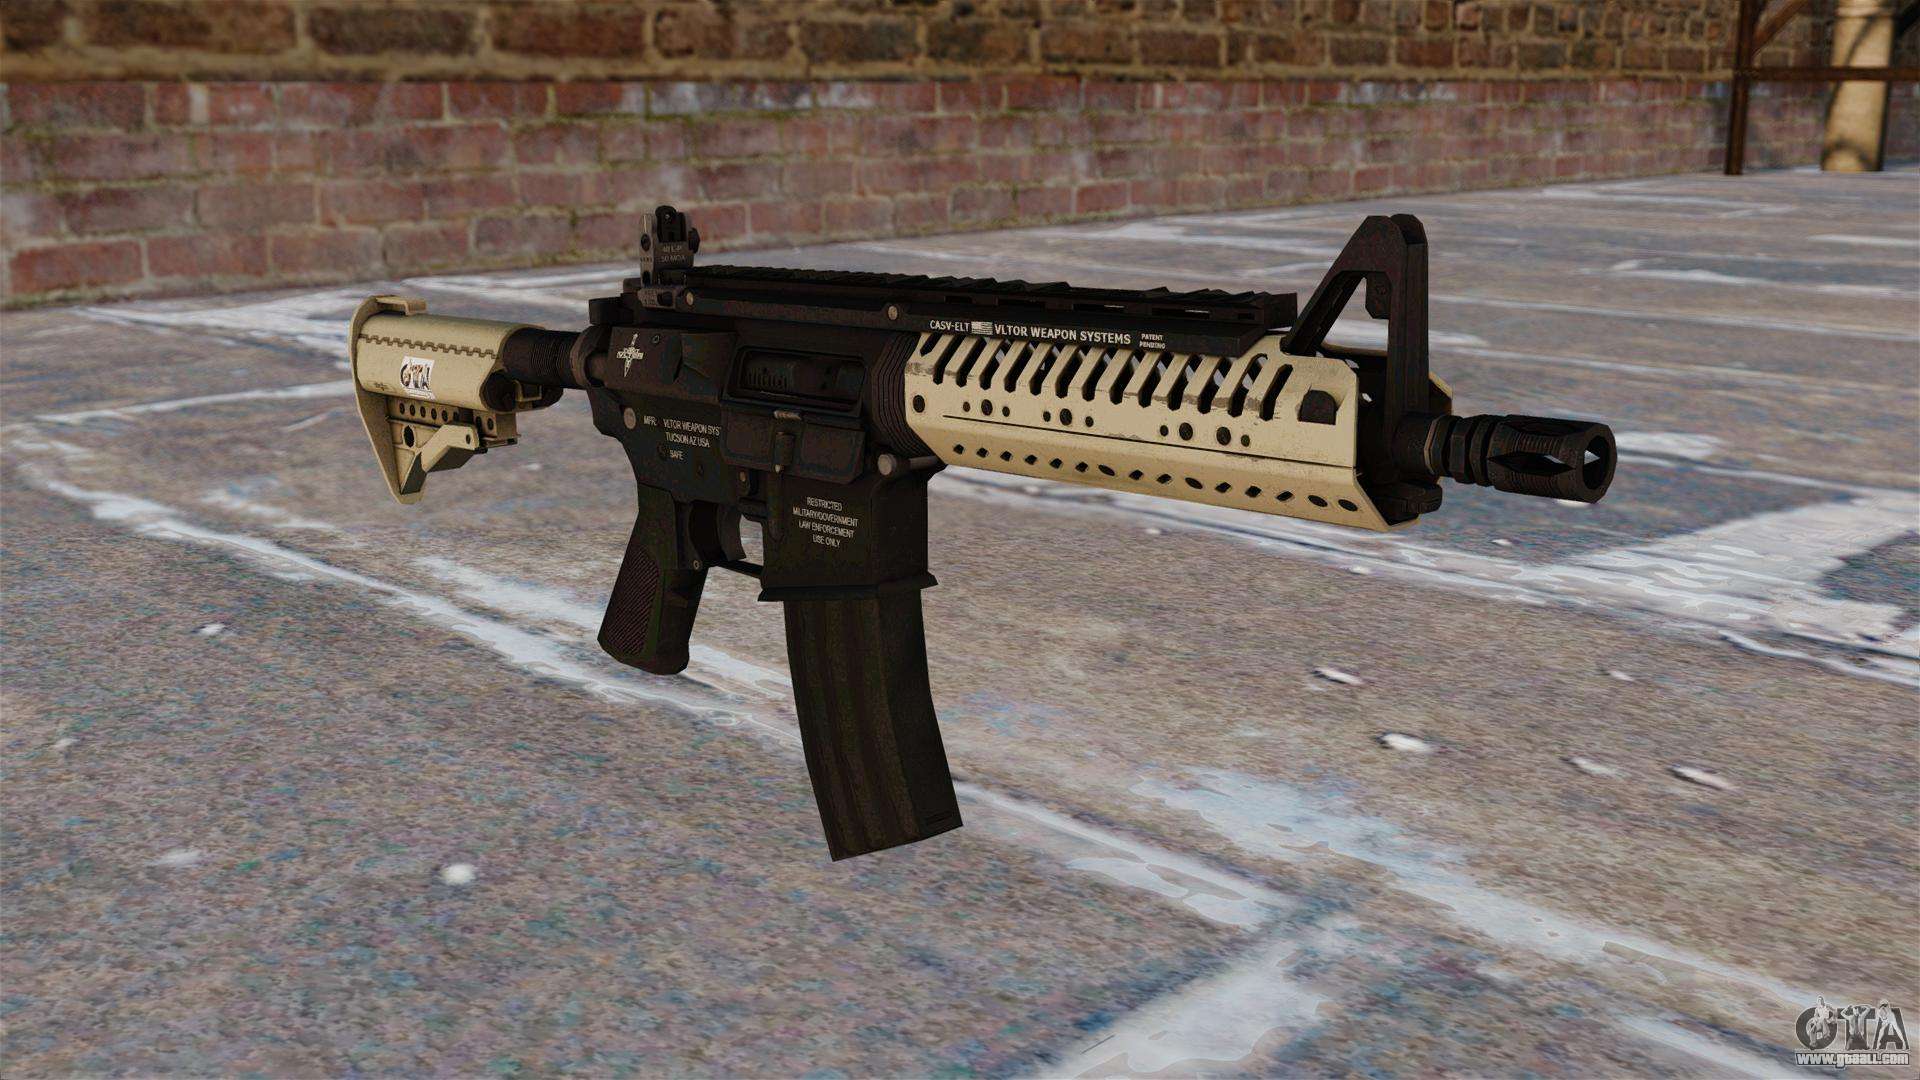 Automatic carbine M4 VLTOR for GTA 4